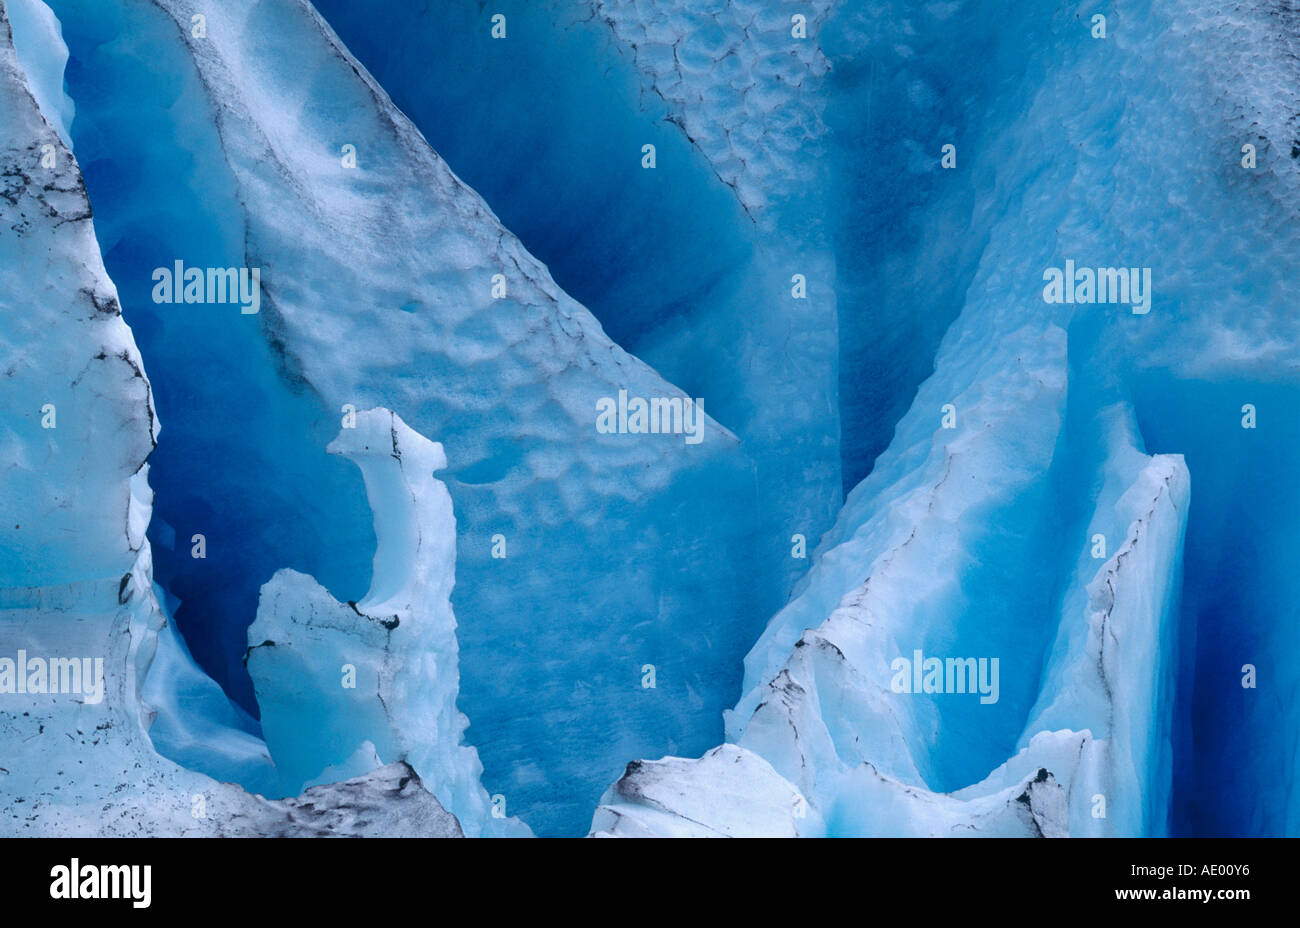 Briksdalsbreen Gletscher iceclimbing jostedalsbreen norway glacierstructures Stock Photo